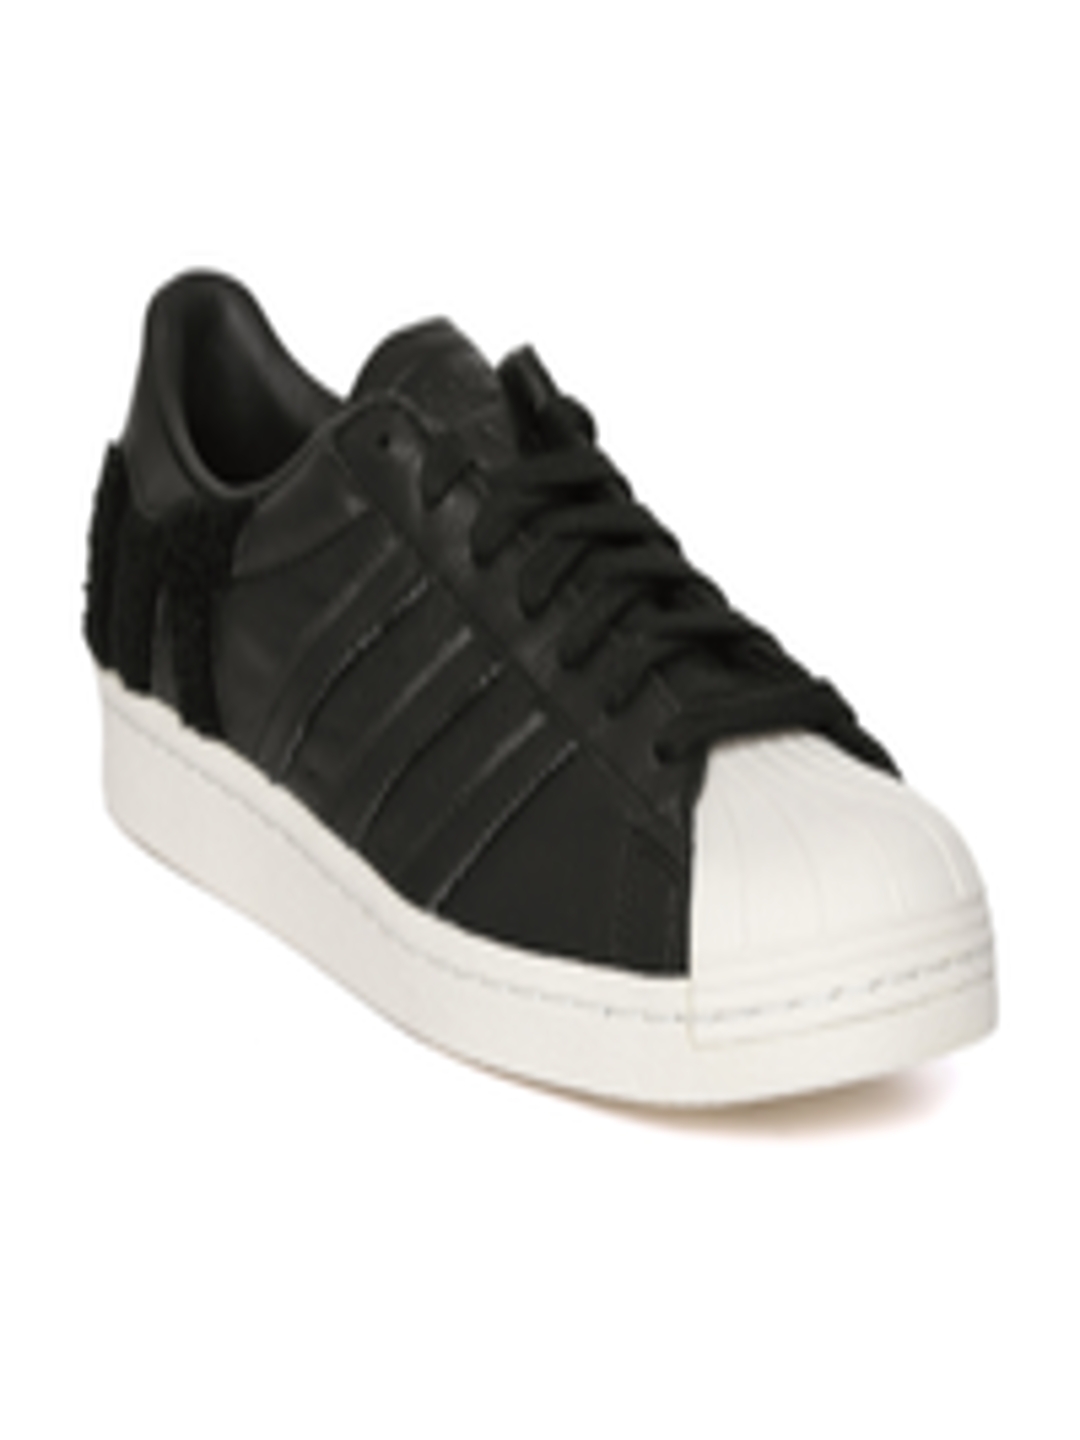 Buy ADIDAS Originals Men Black SUPERSTAR 80S Sneakers - Casual Shoes